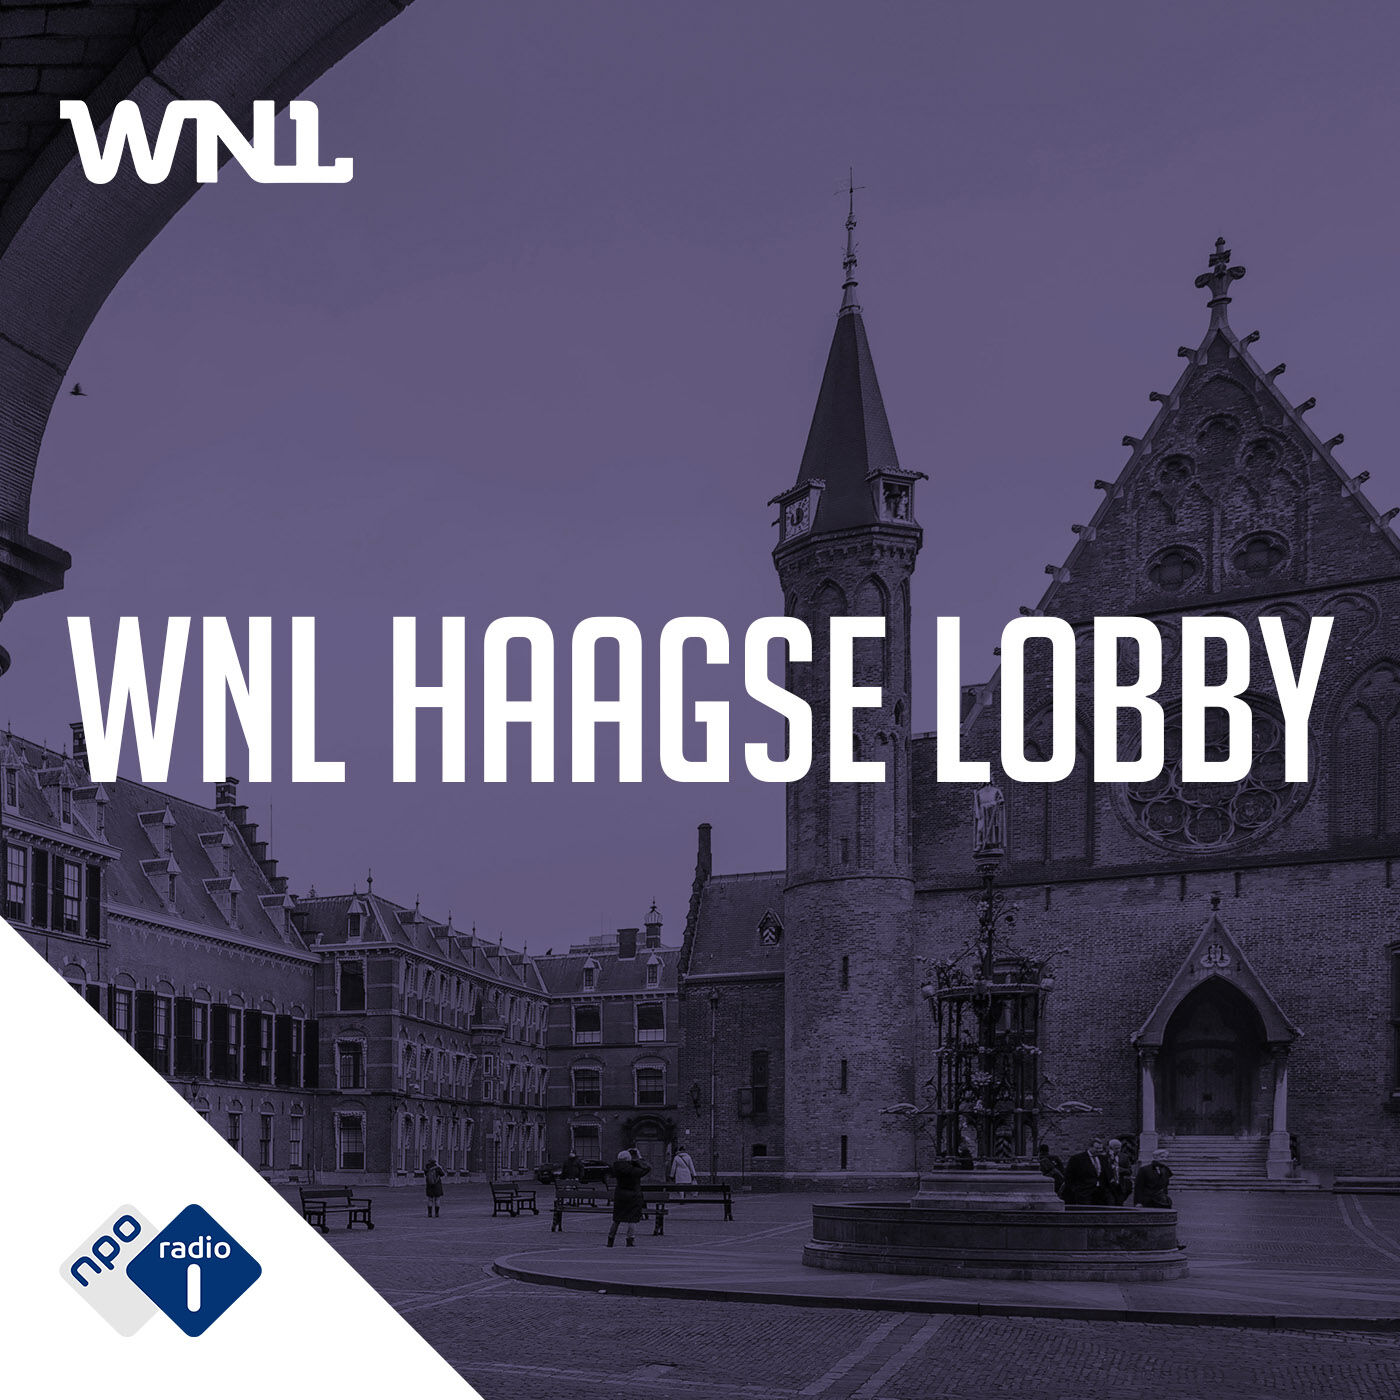 WNL Haagse Lobby logo